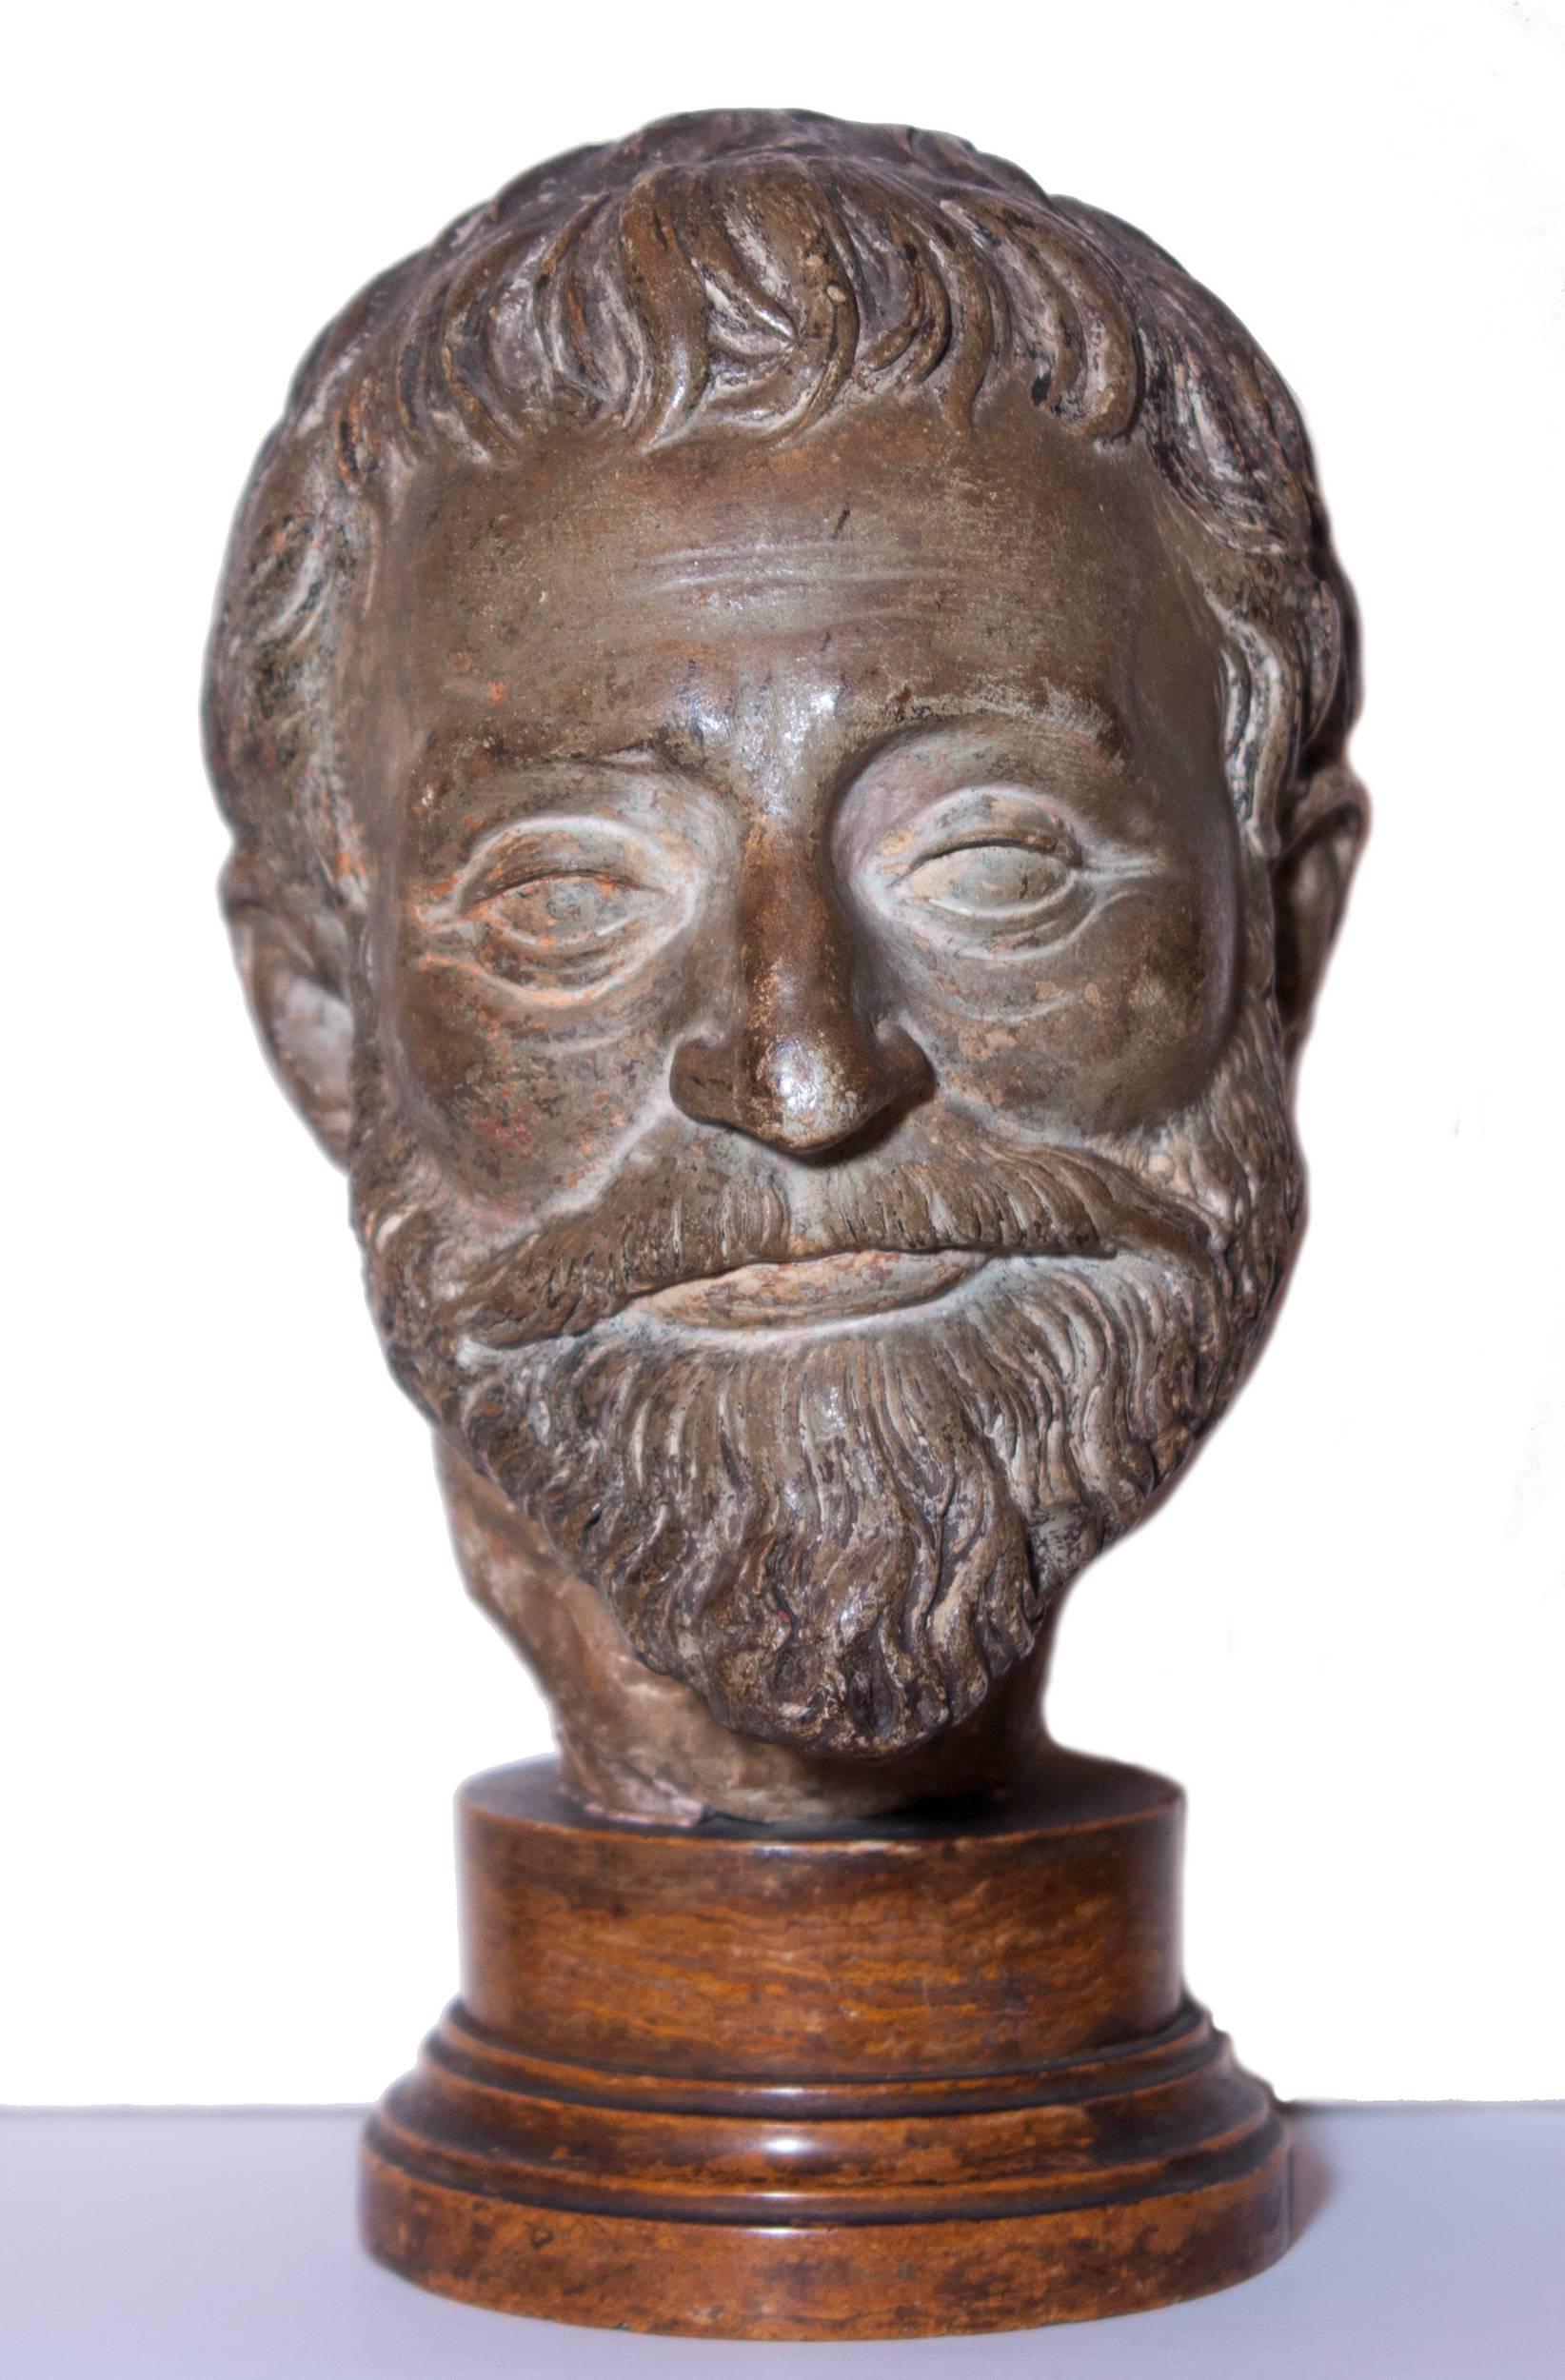 Unknown Figurative Sculpture - Terracotta head of a bearded man, French school circa 1550-1600